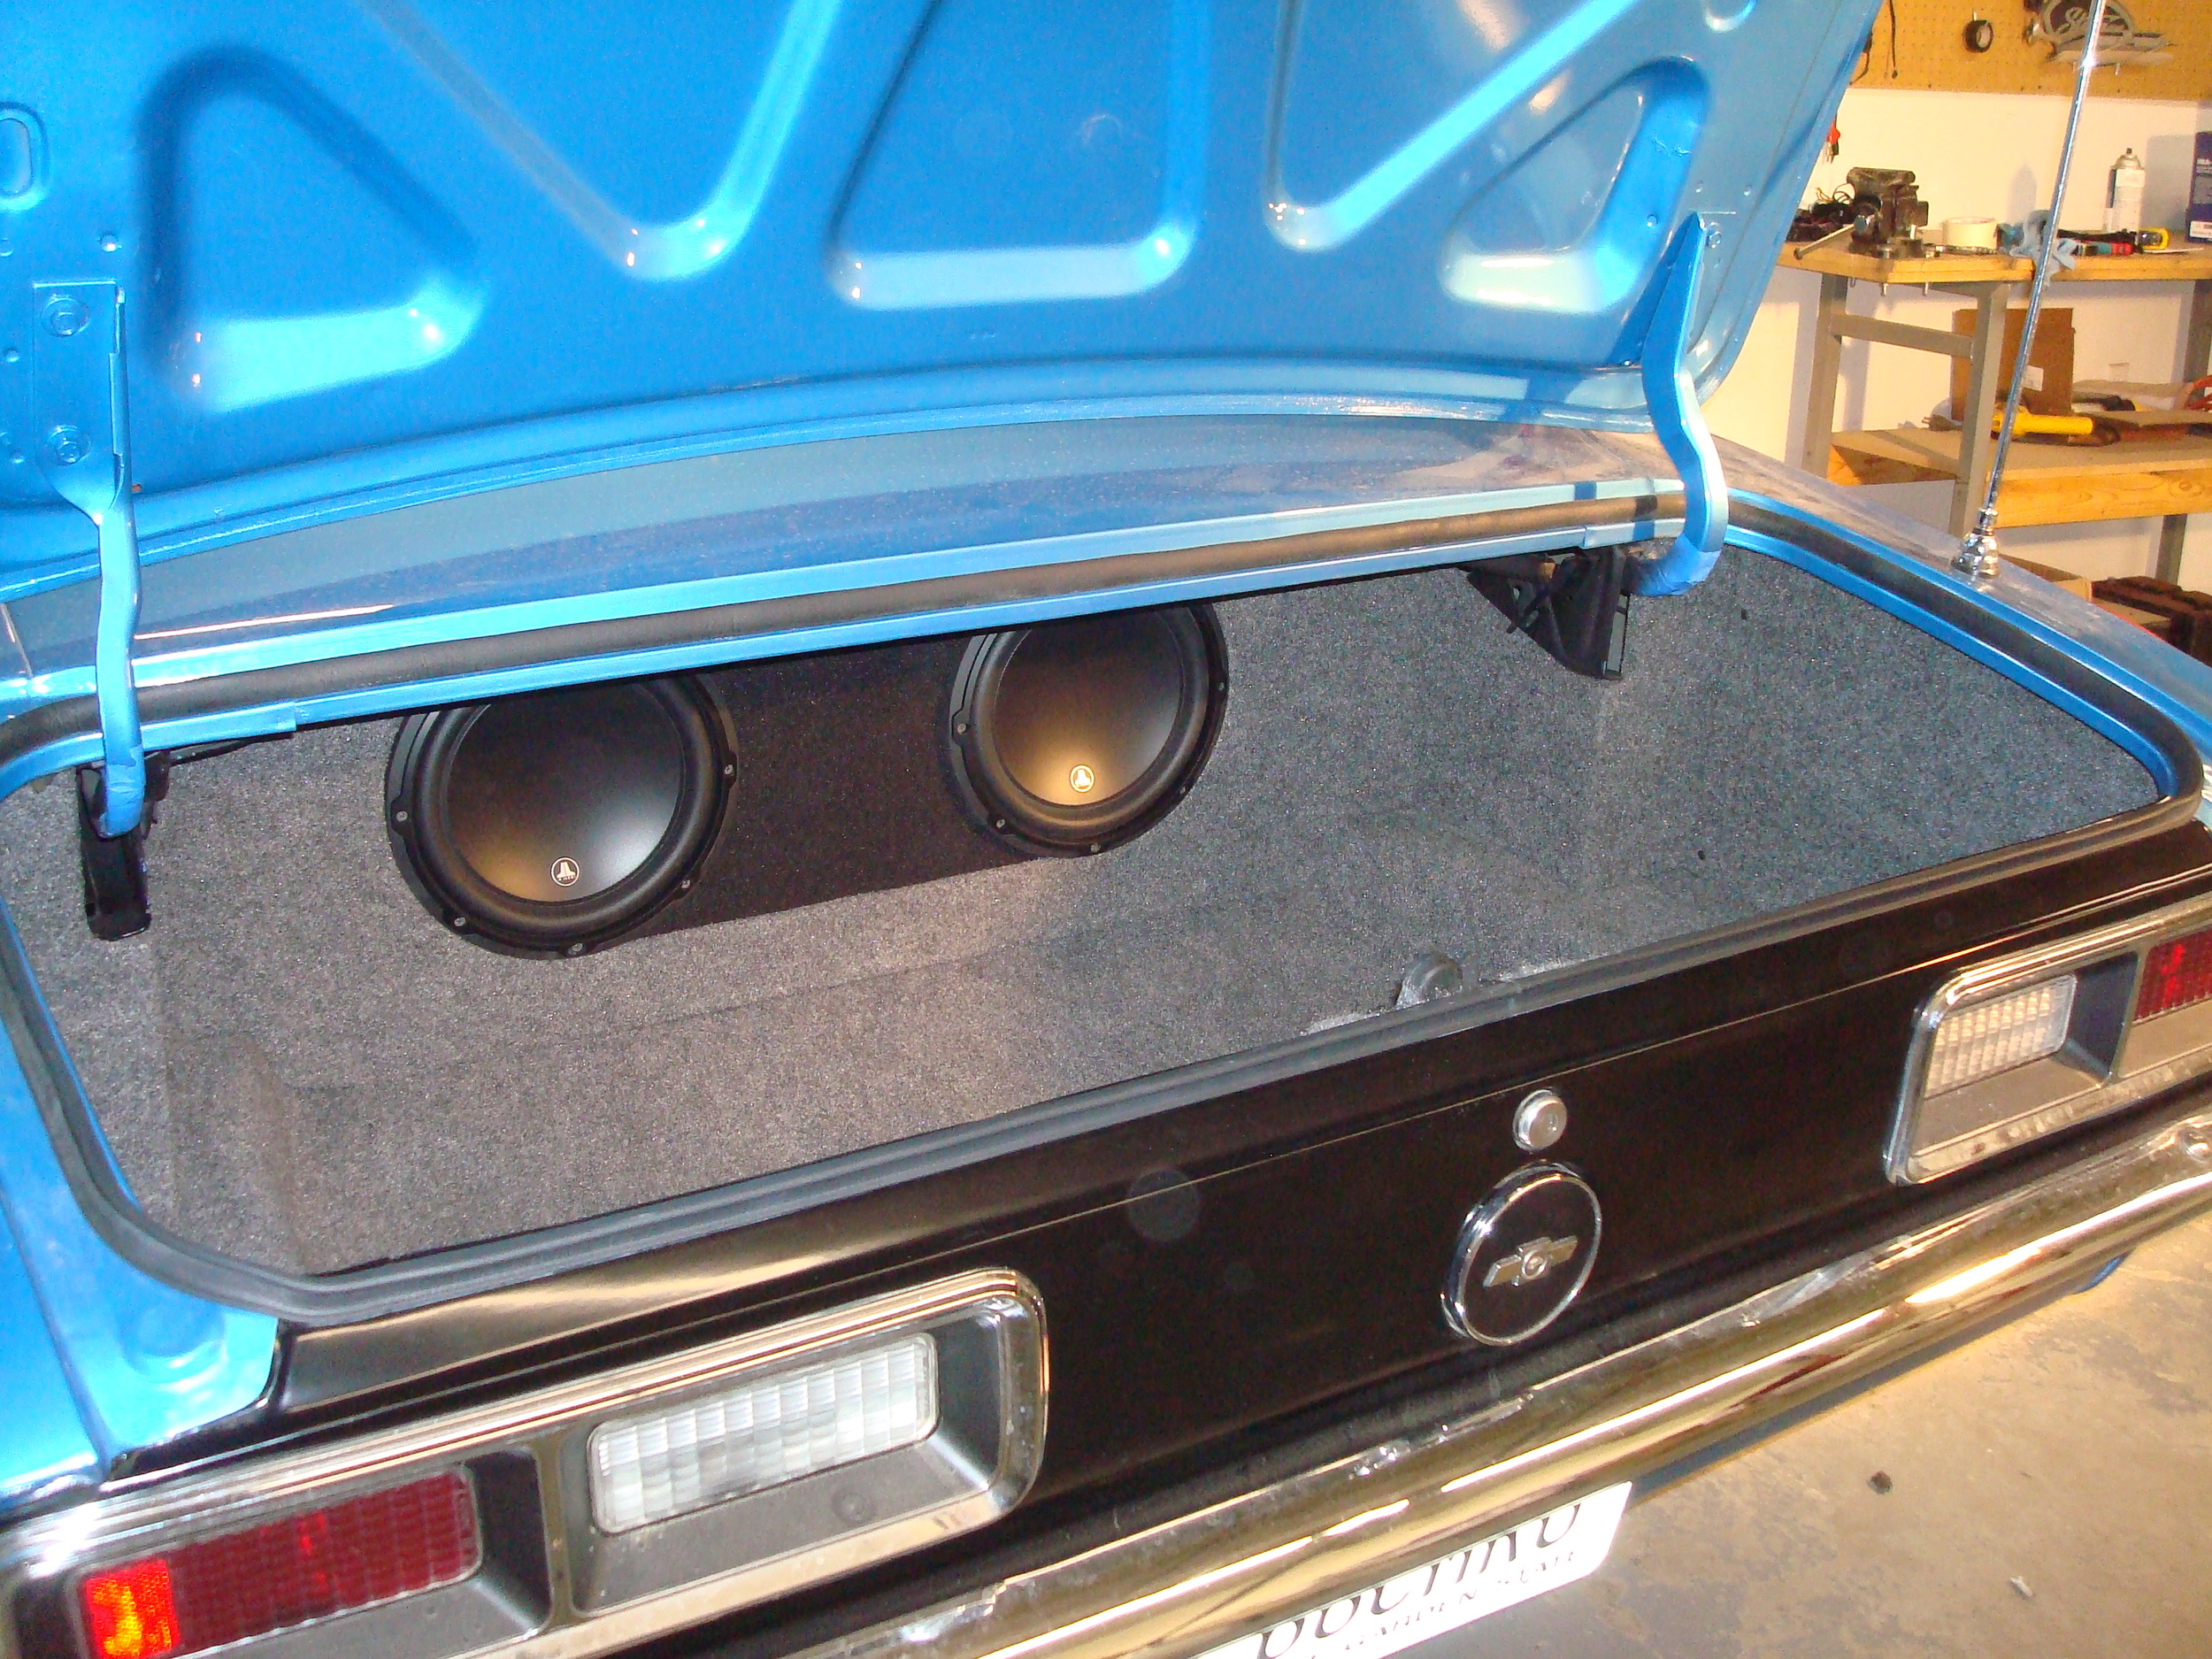 1968 Camaro - Alpine CD Receiver, Rear 6x9" Speakers, Custom Subwoofer Enclosure & Trunk Finishing